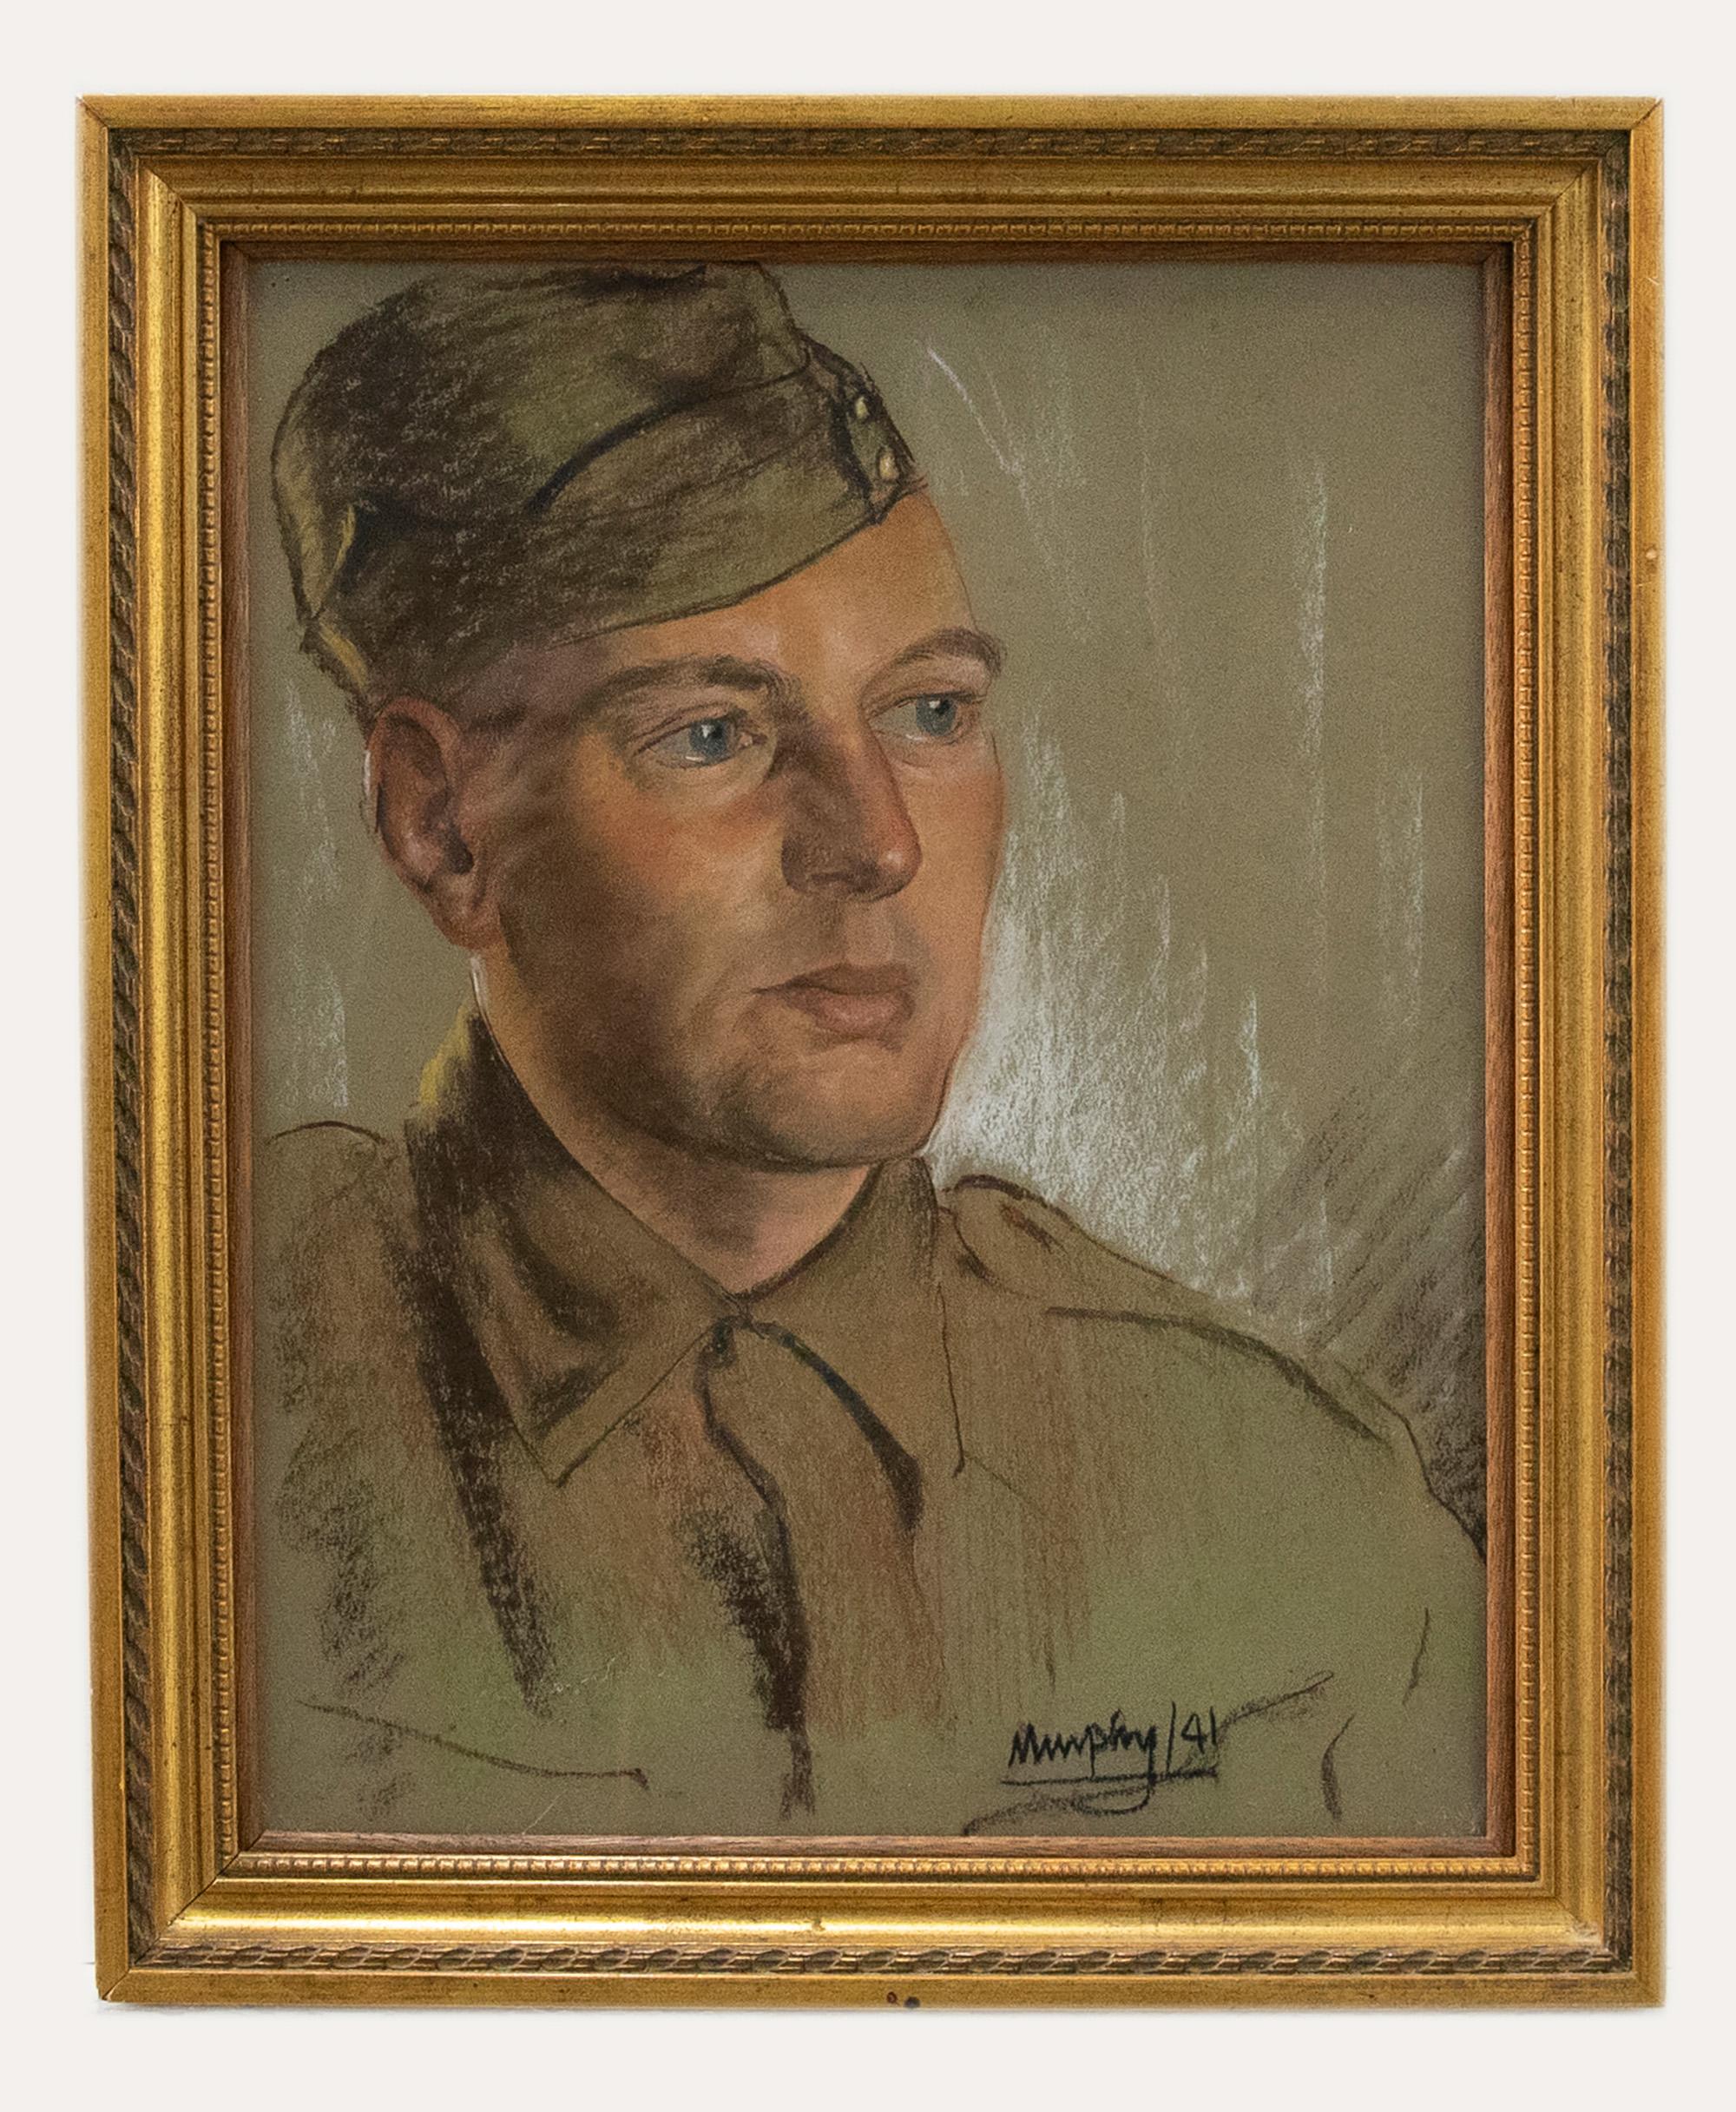 Unknown Portrait - Murphy - 1941 Pastel, A Soldier